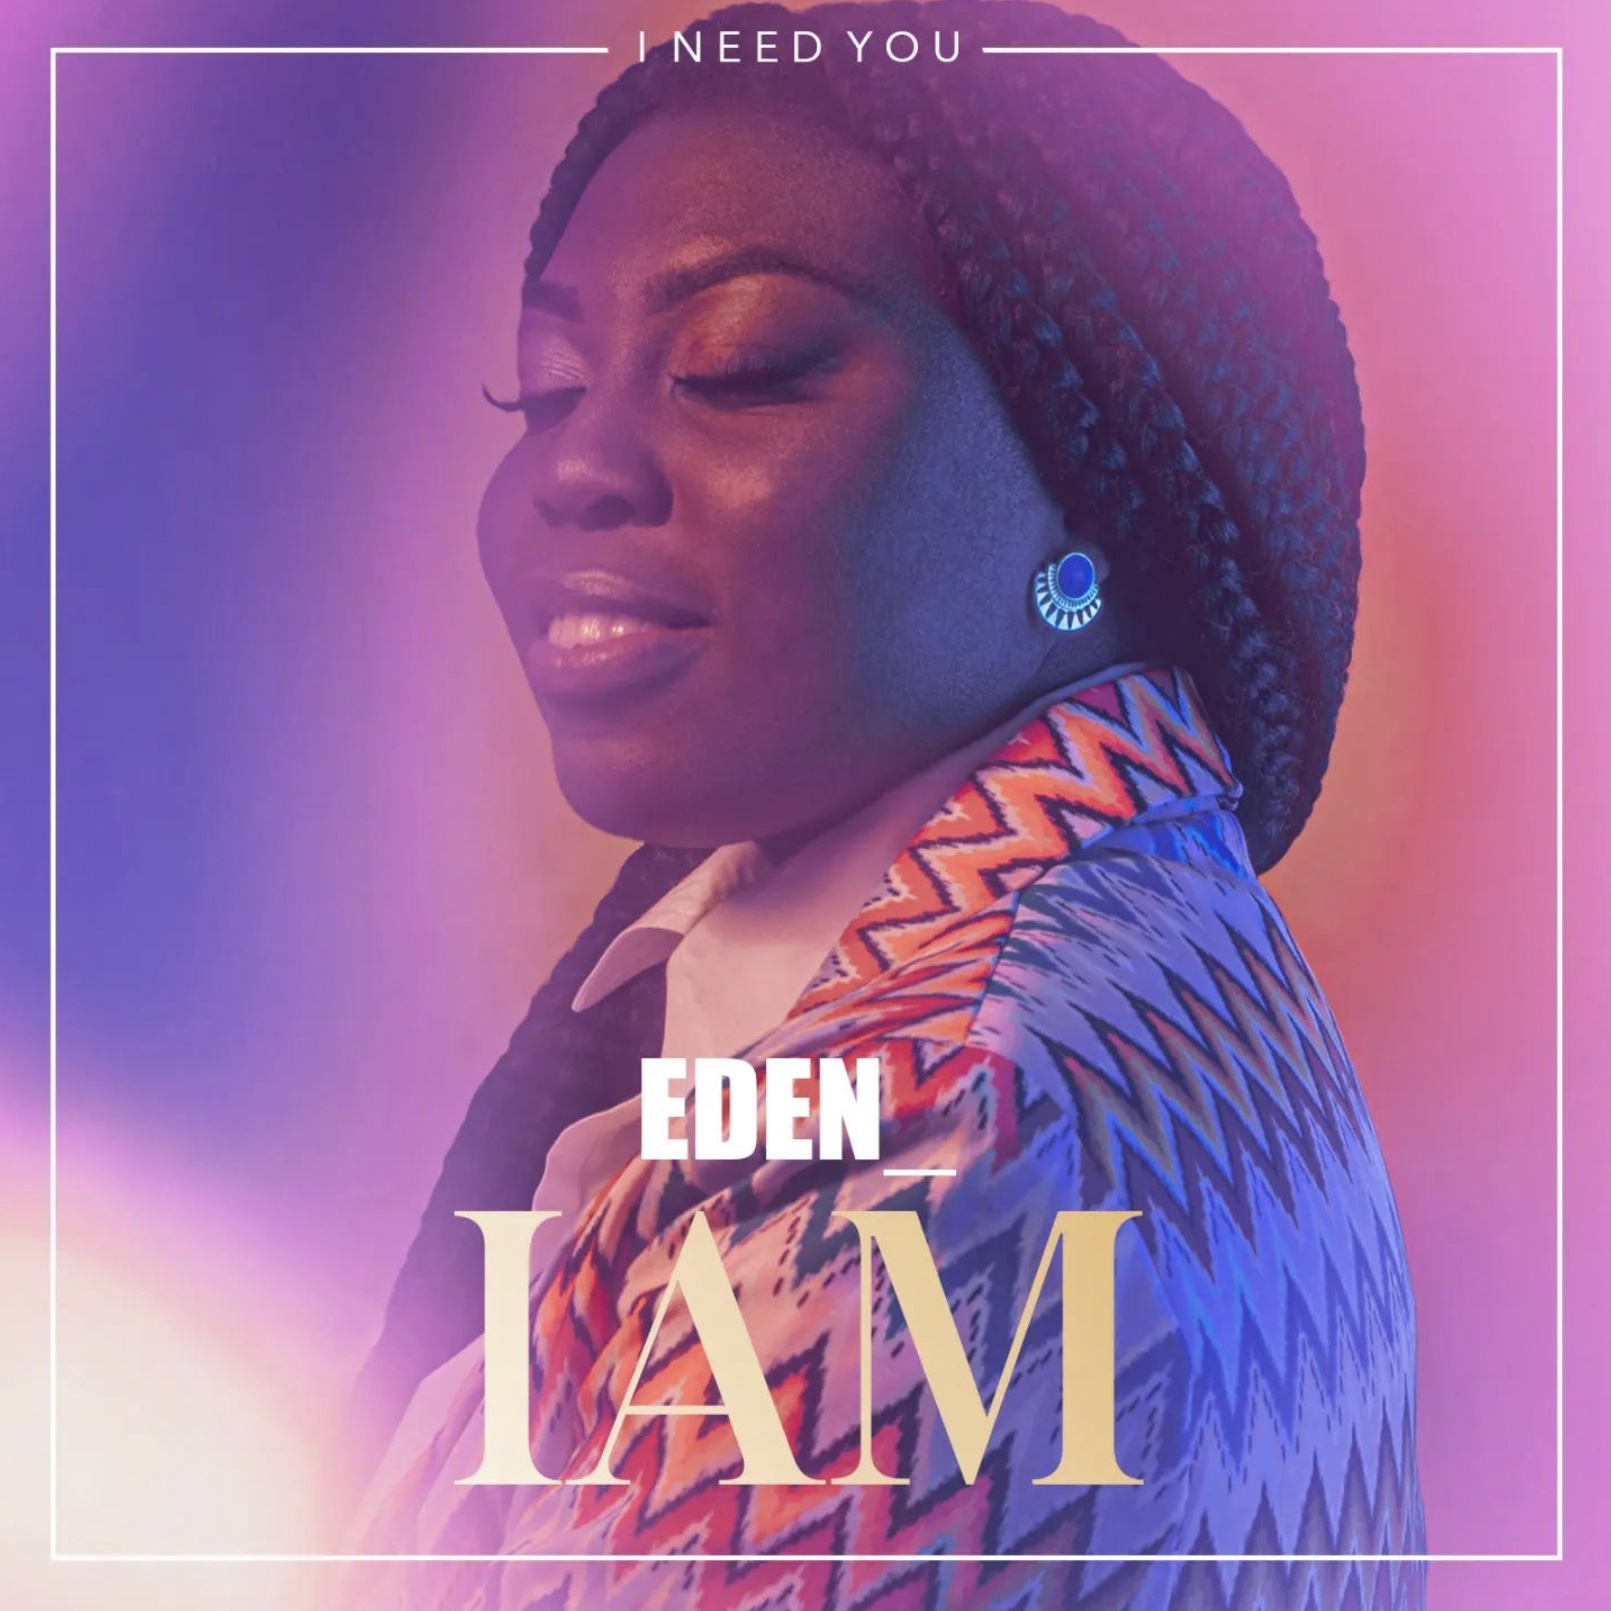 “I Need You” – Eden